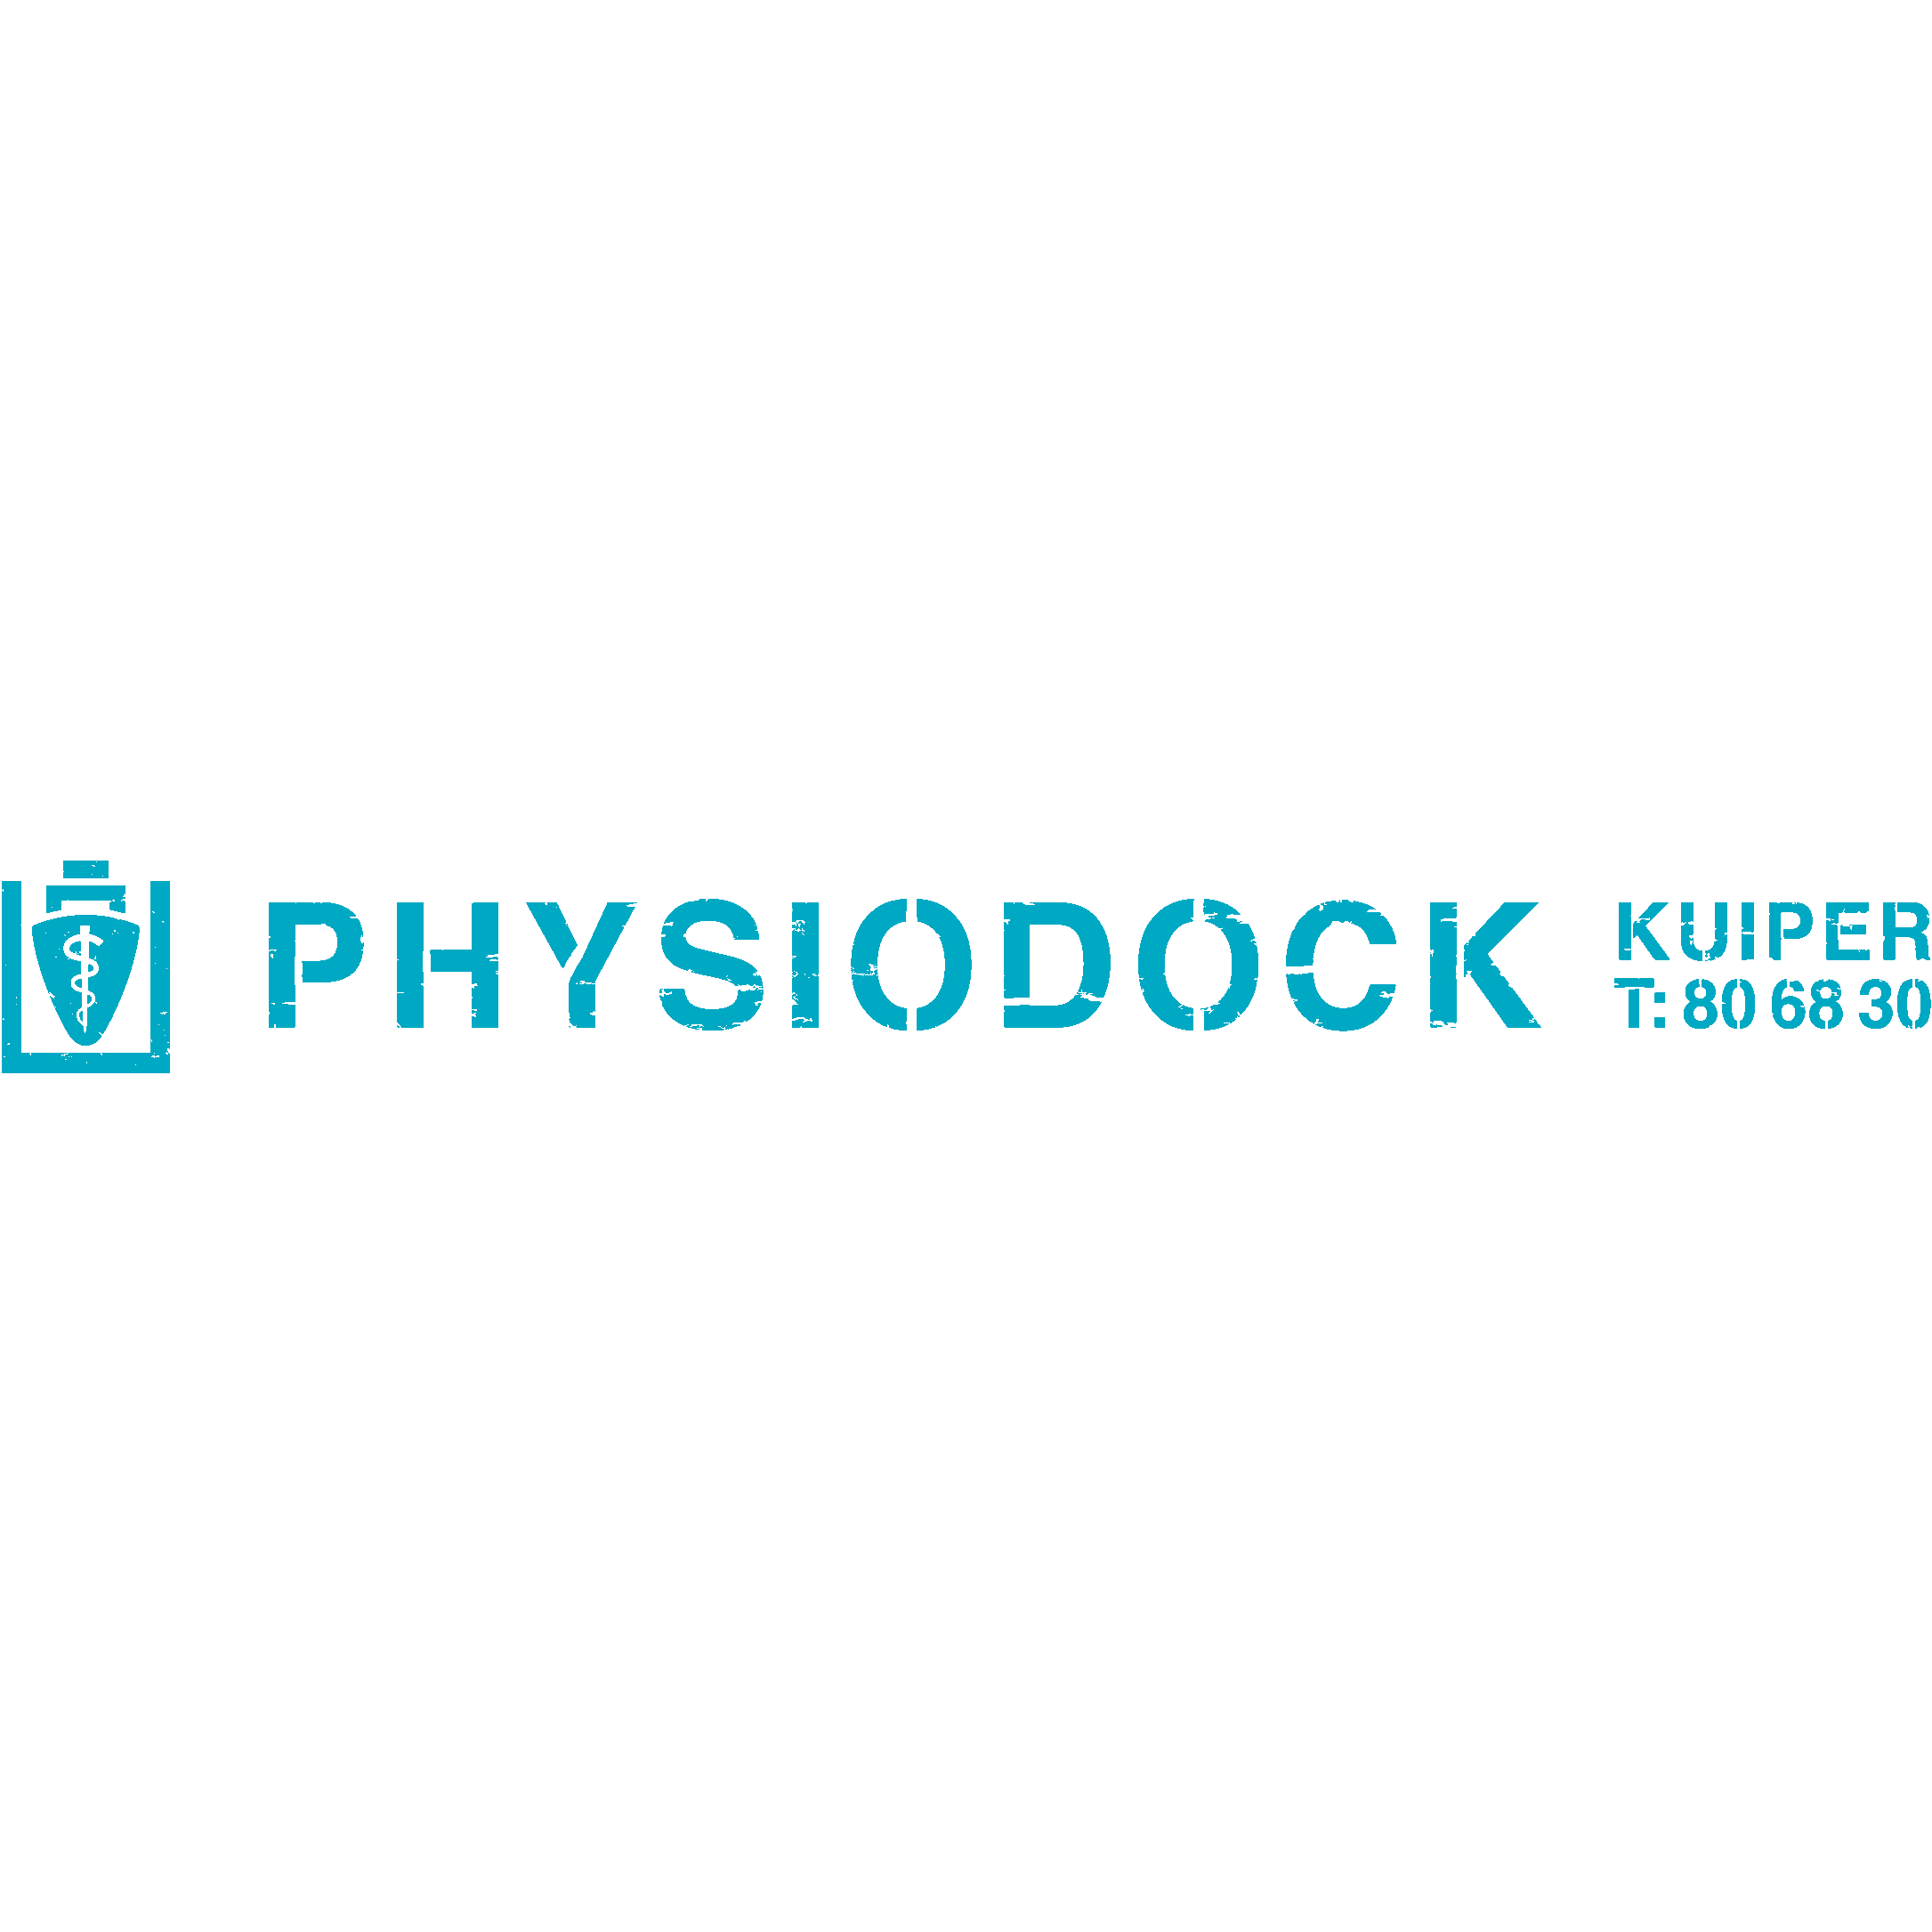 PHYSIODOCK Robert Kuiper Logo